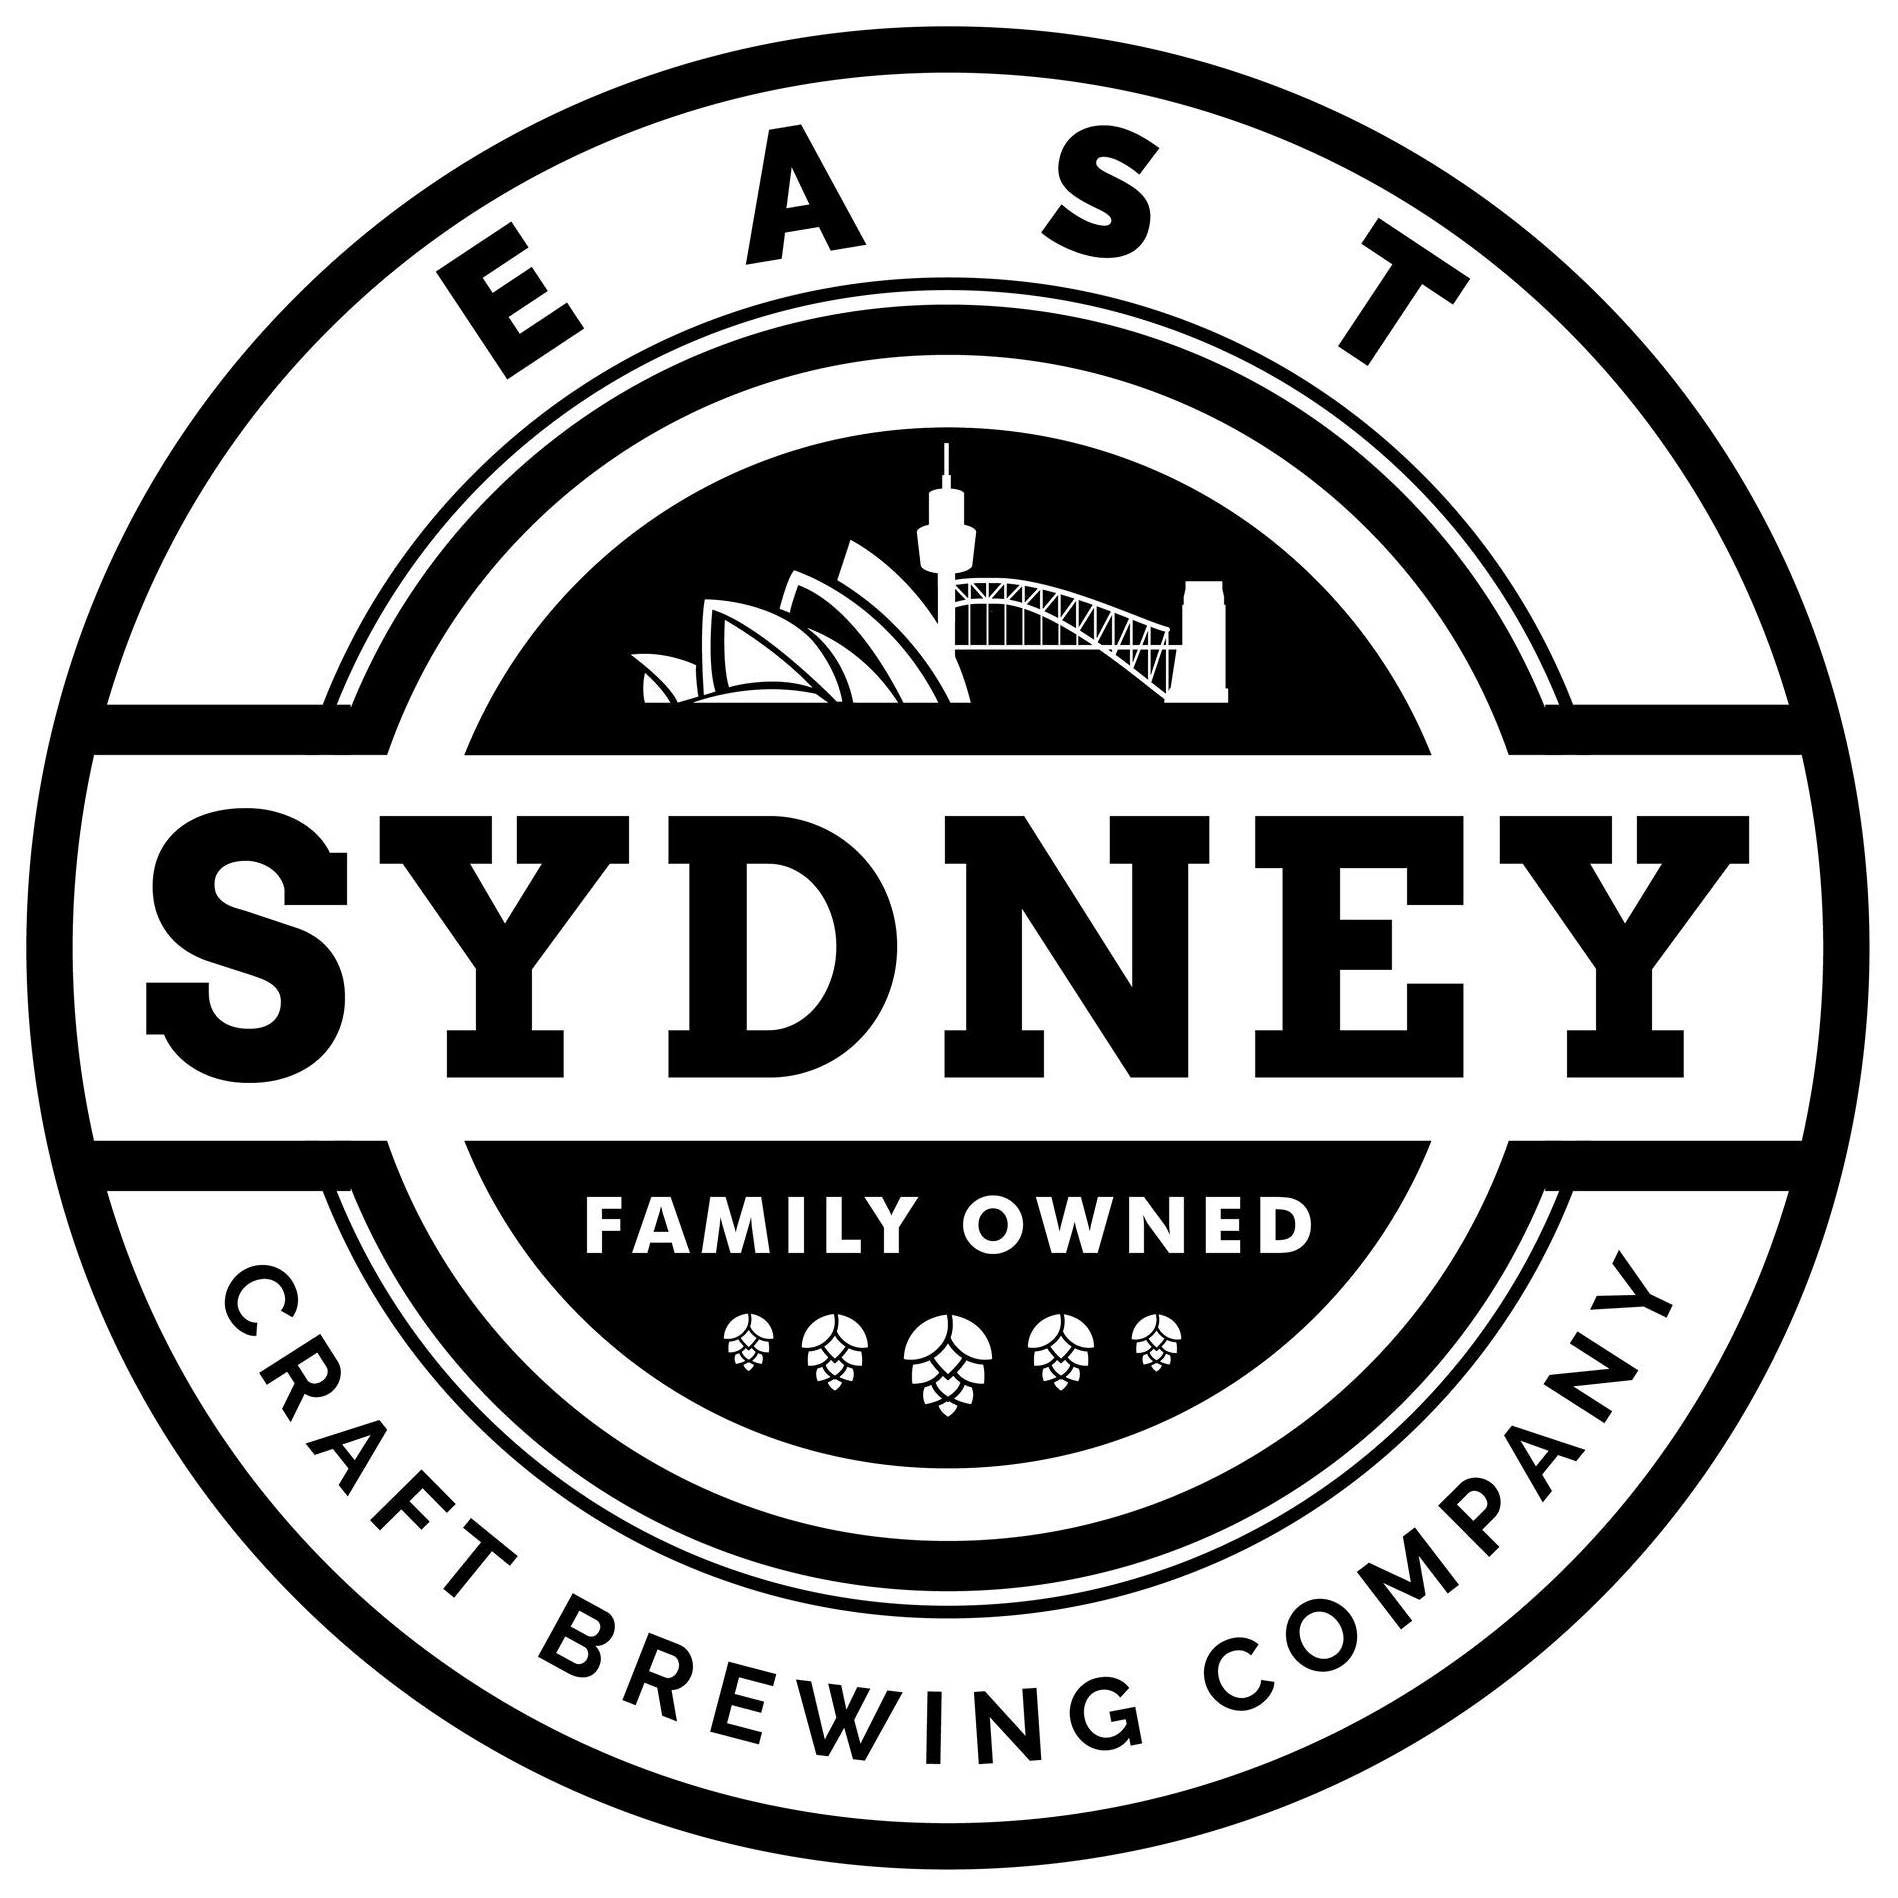 East Sydney Brewing Co.